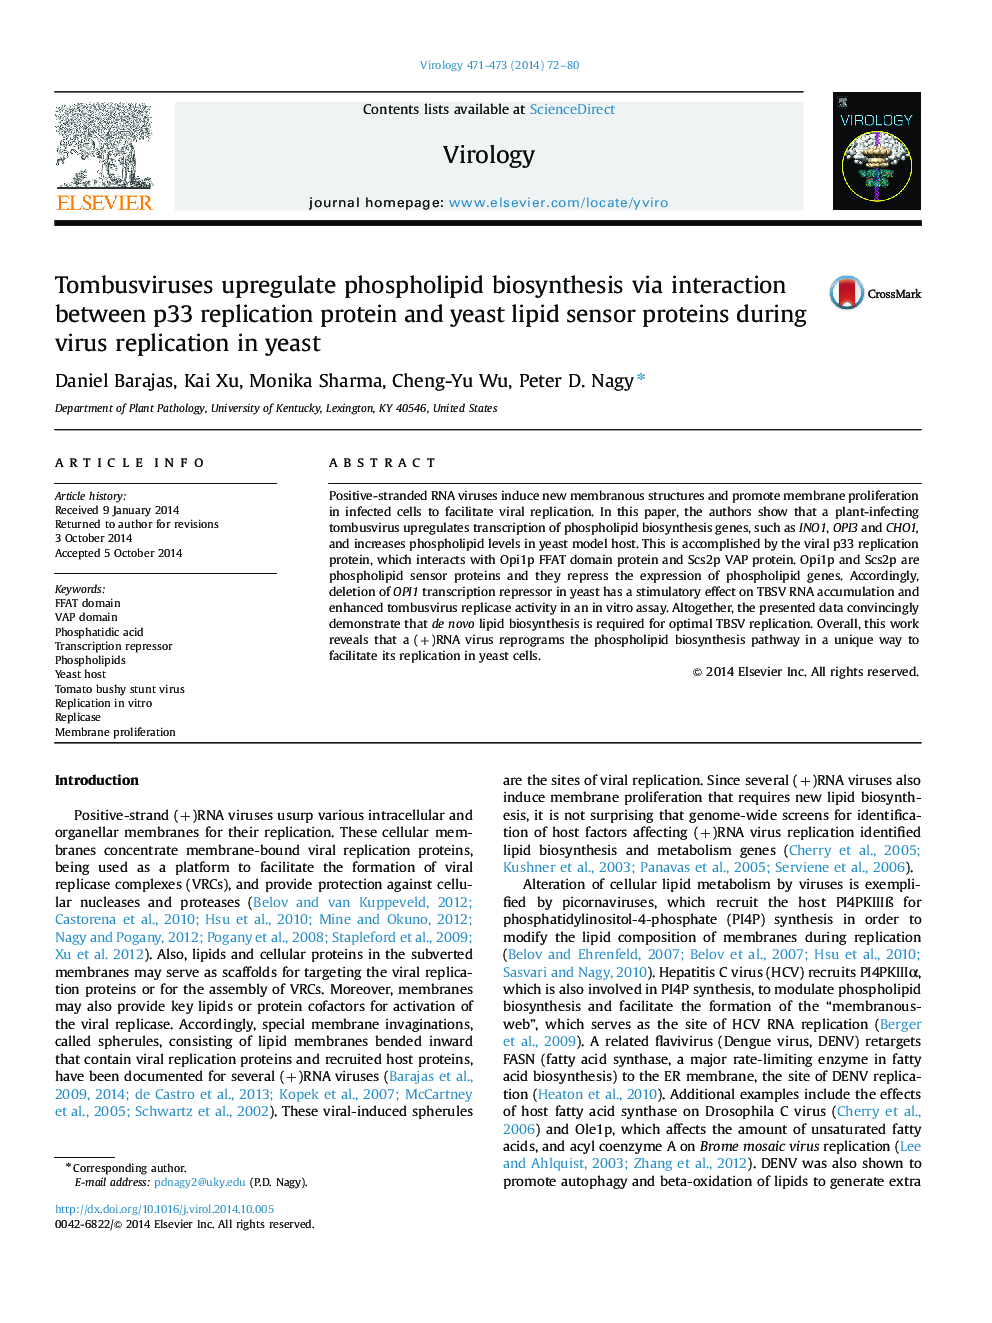 Tombusviruses upregulate phospholipid biosynthesis via interaction between p33 replication protein and yeast lipid sensor proteins during virus replication in yeast